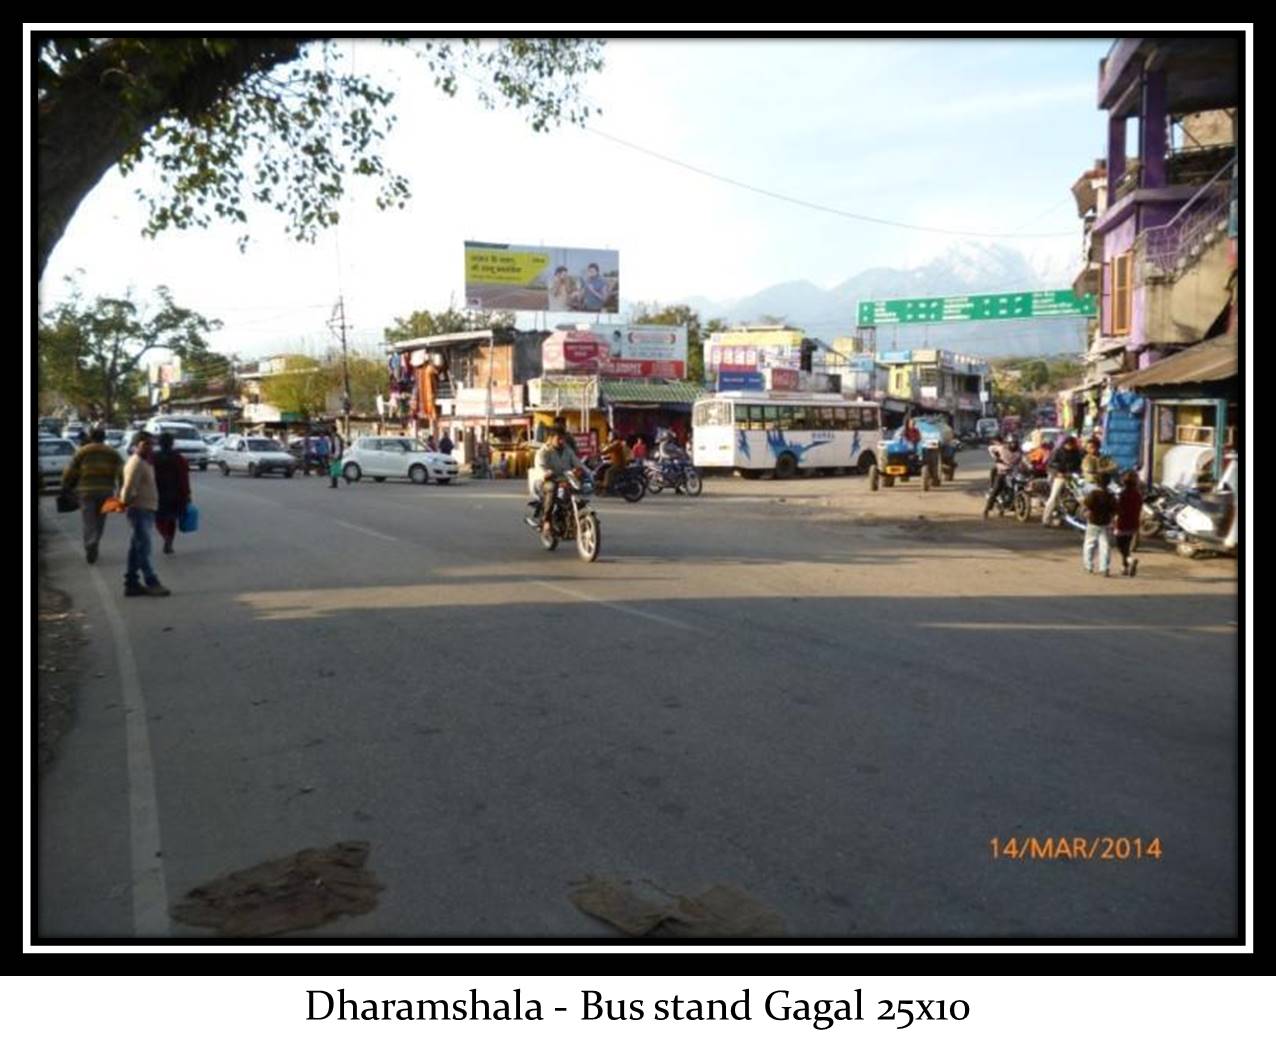 Bus stand Gagal, Dharamshala